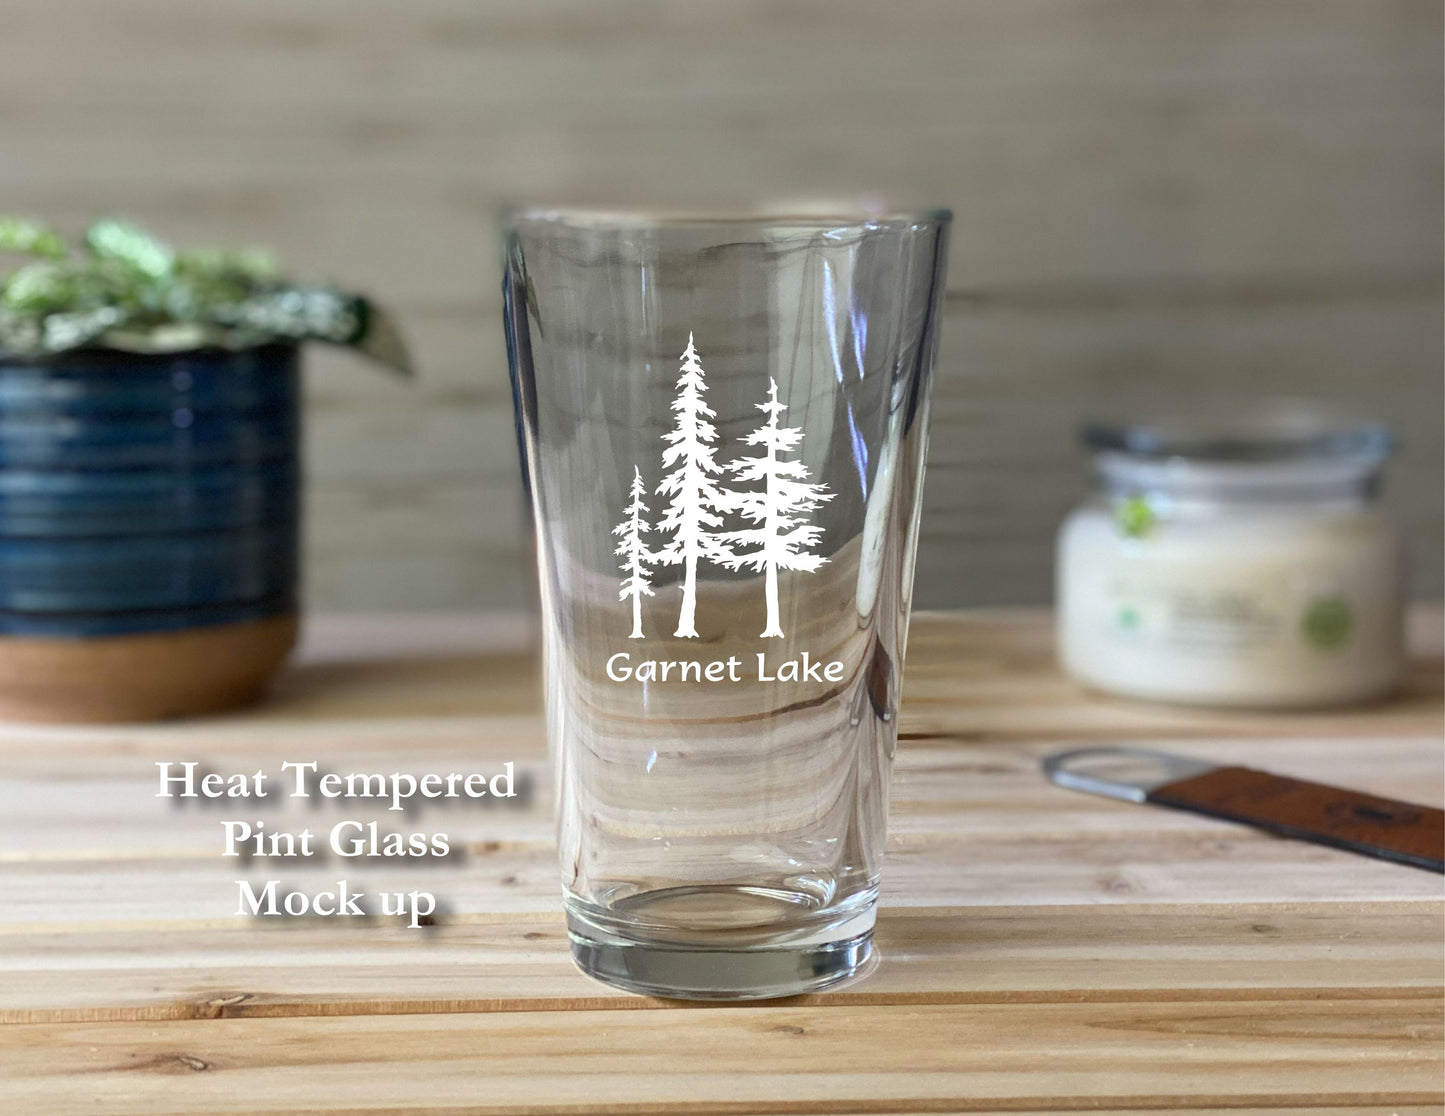 Trees with Garnet Lake -  Pint glass